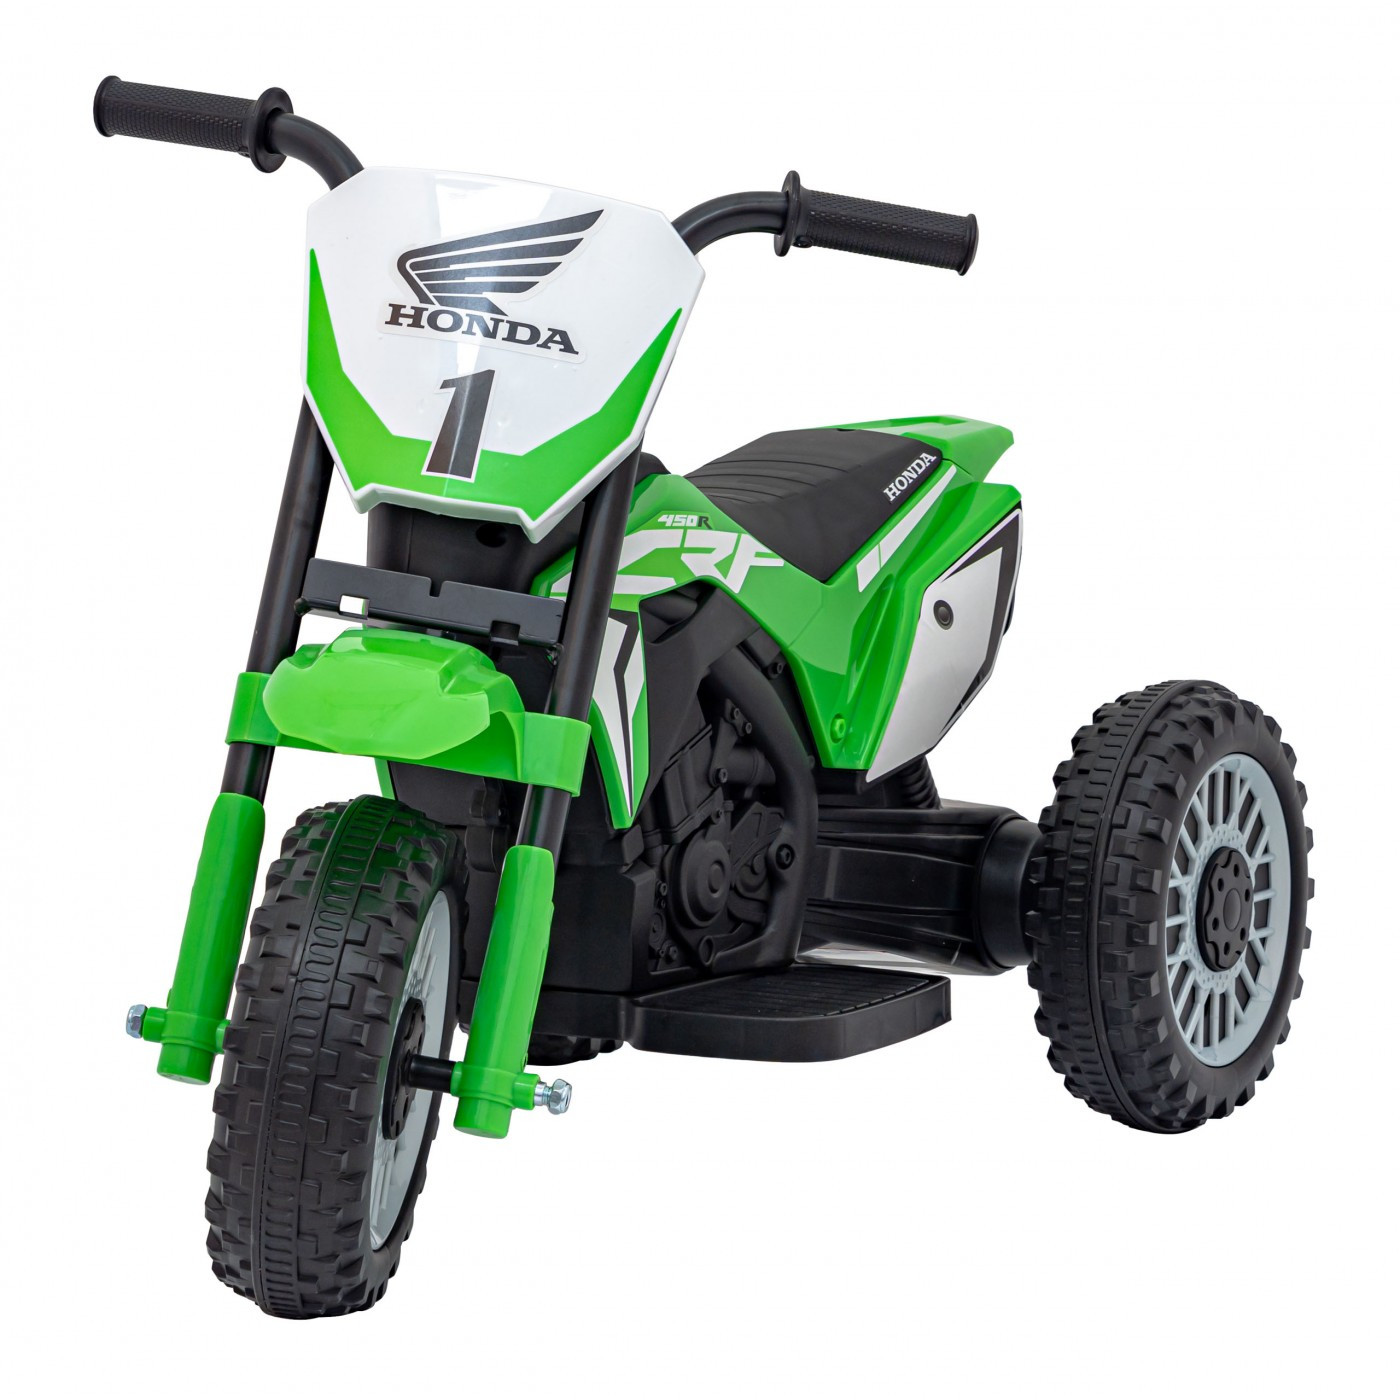 mamido Dětská elektrická motorka Cross Honda CRF 450R zelená